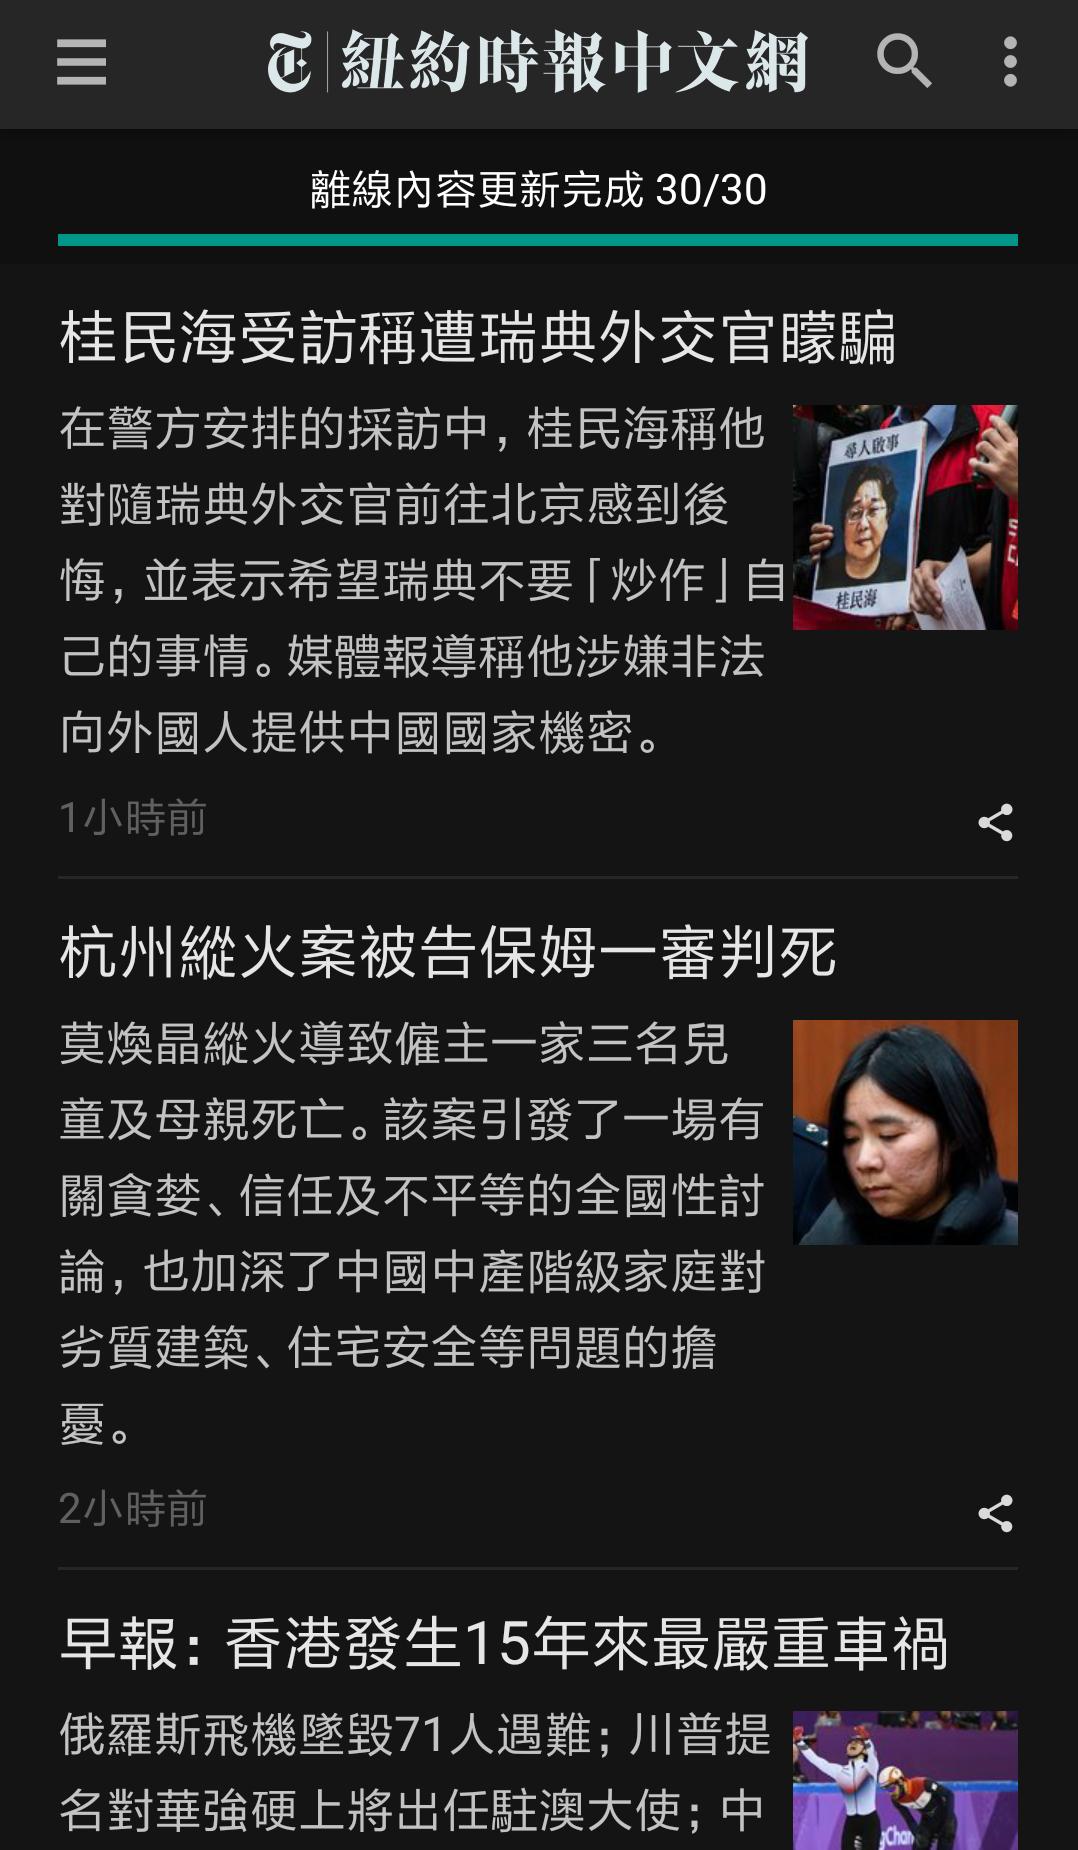 NYTimes - Chinese Edition 1.1.0.29 Screenshot 2